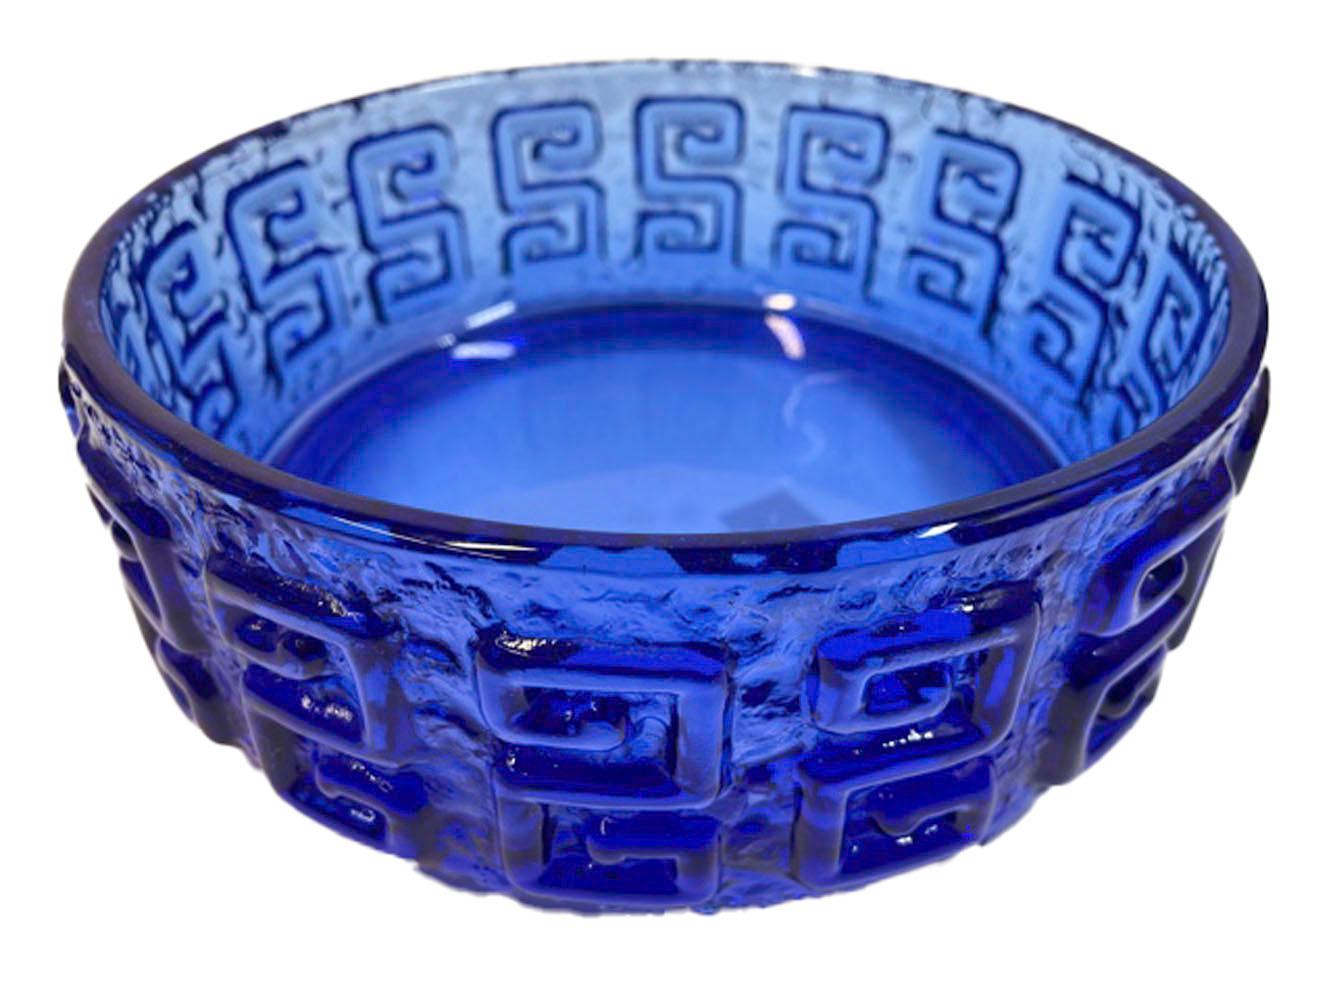 Scandinavian Modern Mid-Century Modern Riihimaki Bowl in Kingfisher Blue with Raised Greek Key